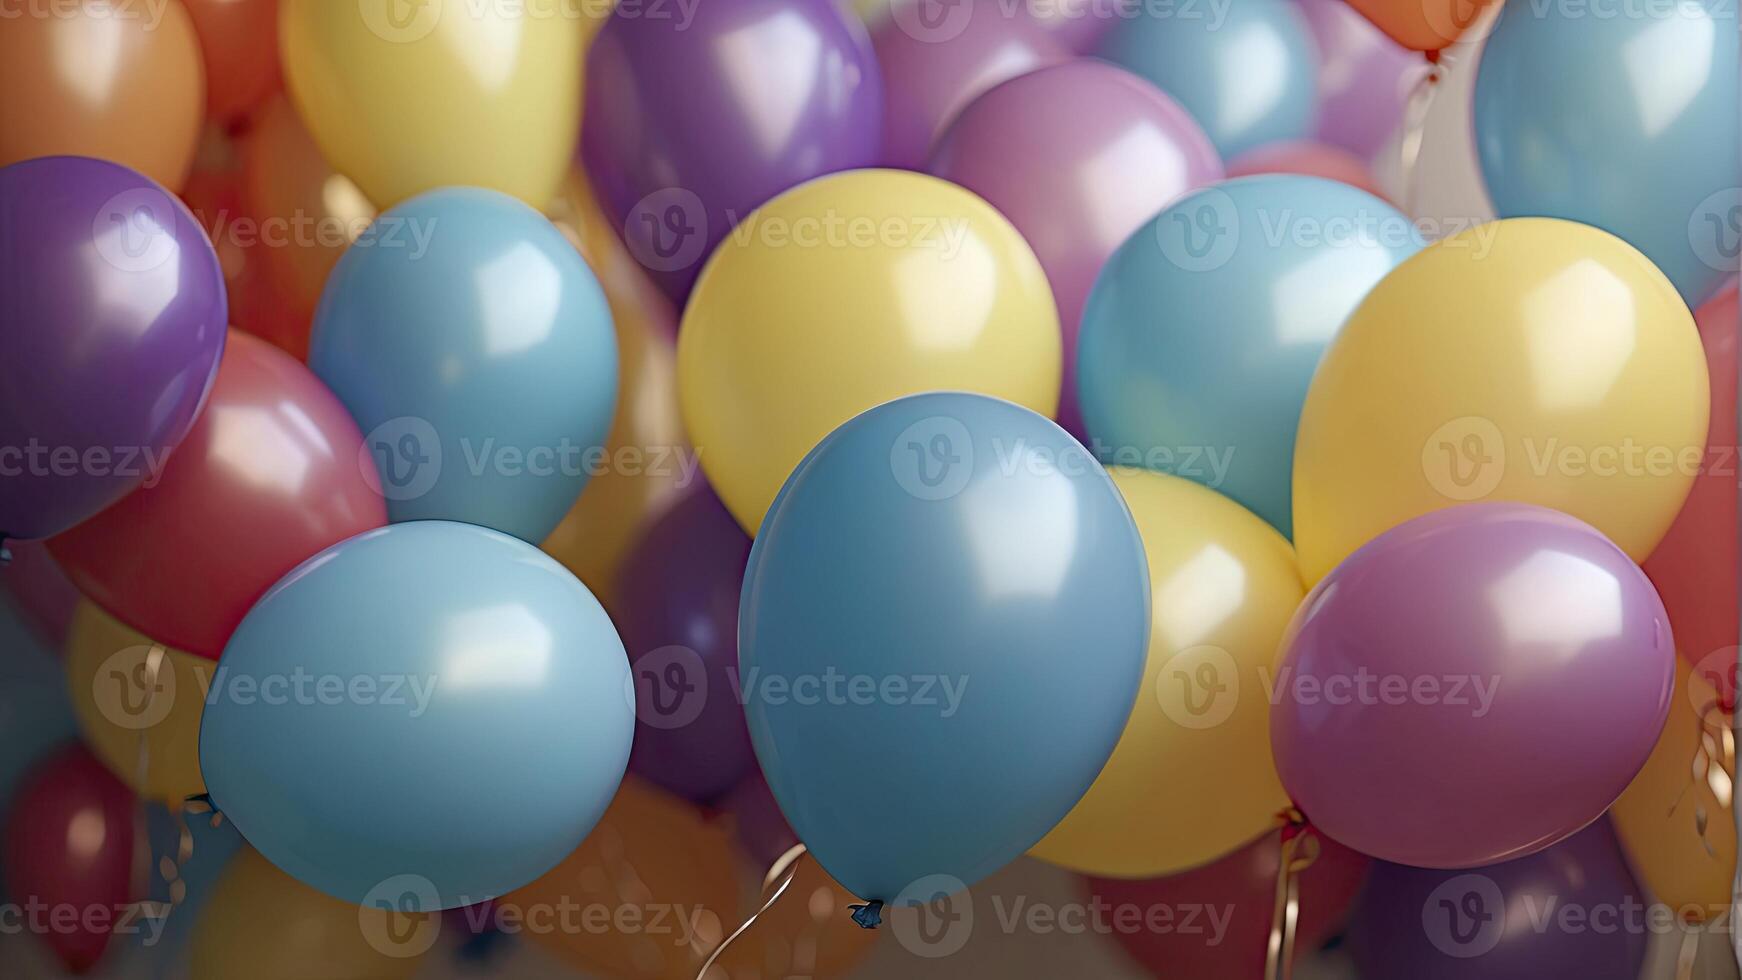 ai genererad färgrik ballonger i de luft, färgrik ballonger bakgrund, färgad ballong tapet, Lycklig bakgrund foto